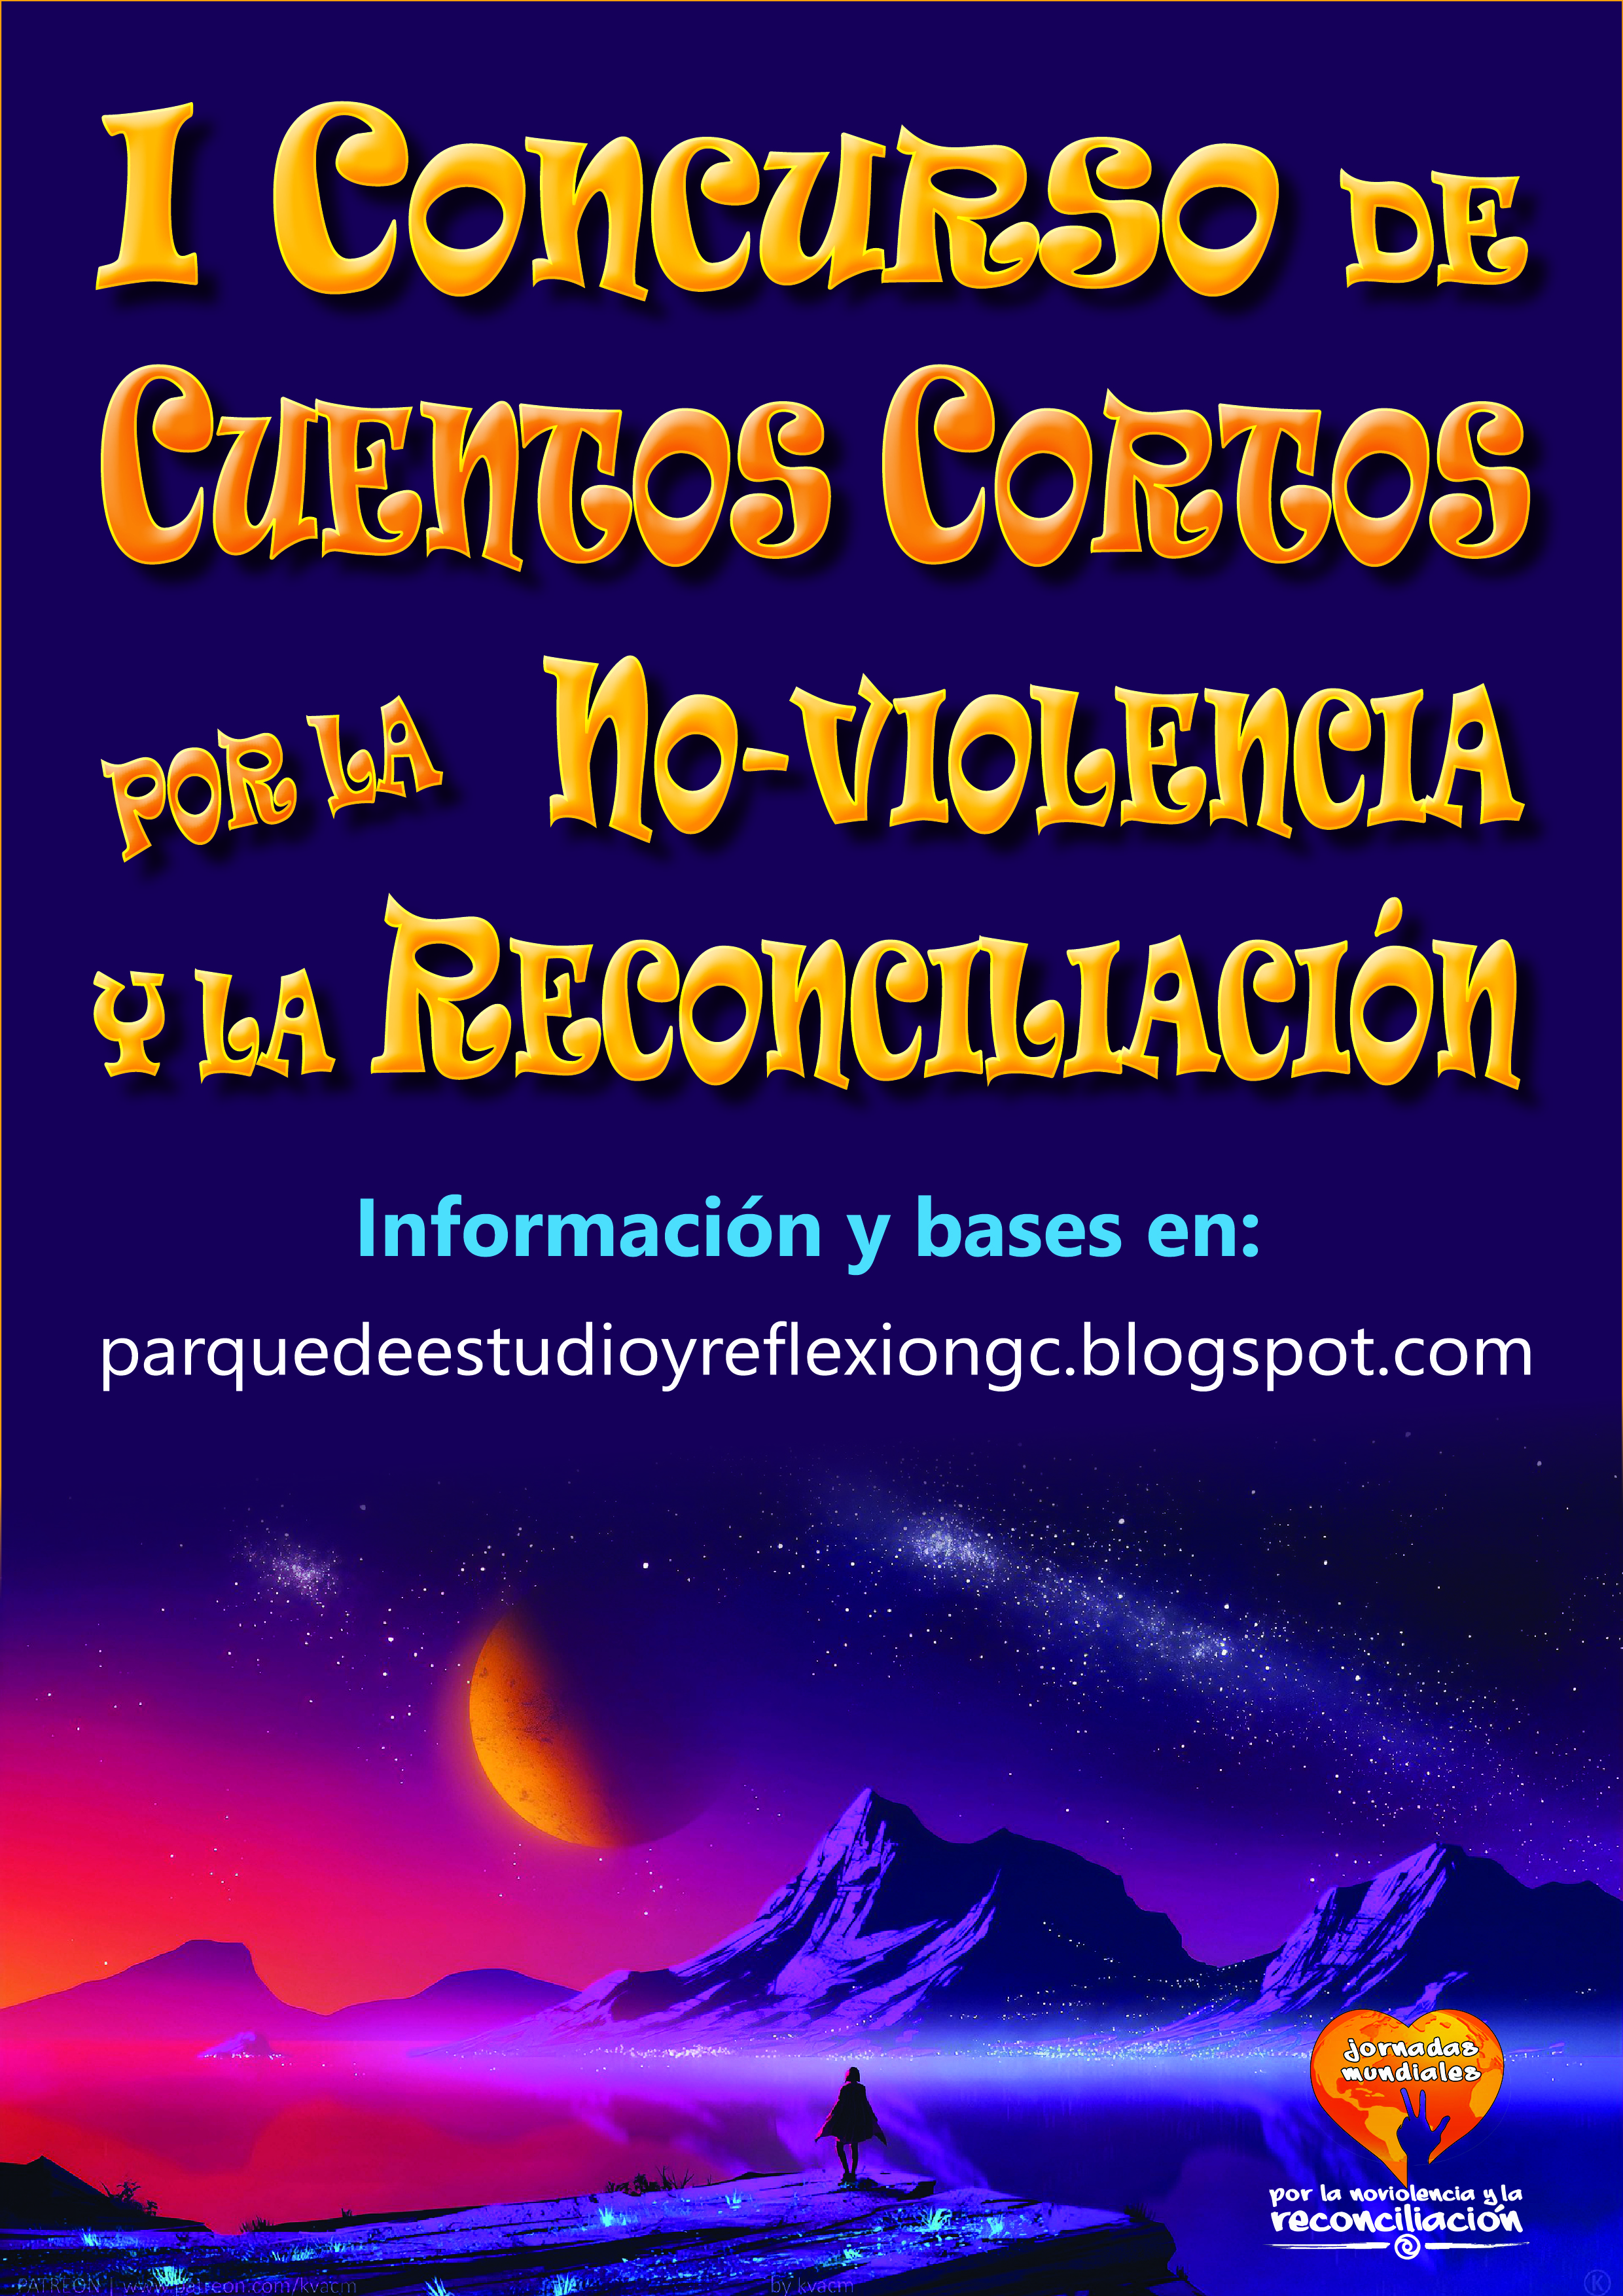 IConcursoInternacionalCuentosCortosNoViolenciaYReconciliacion_CentroHumanistaDeLasCulturas